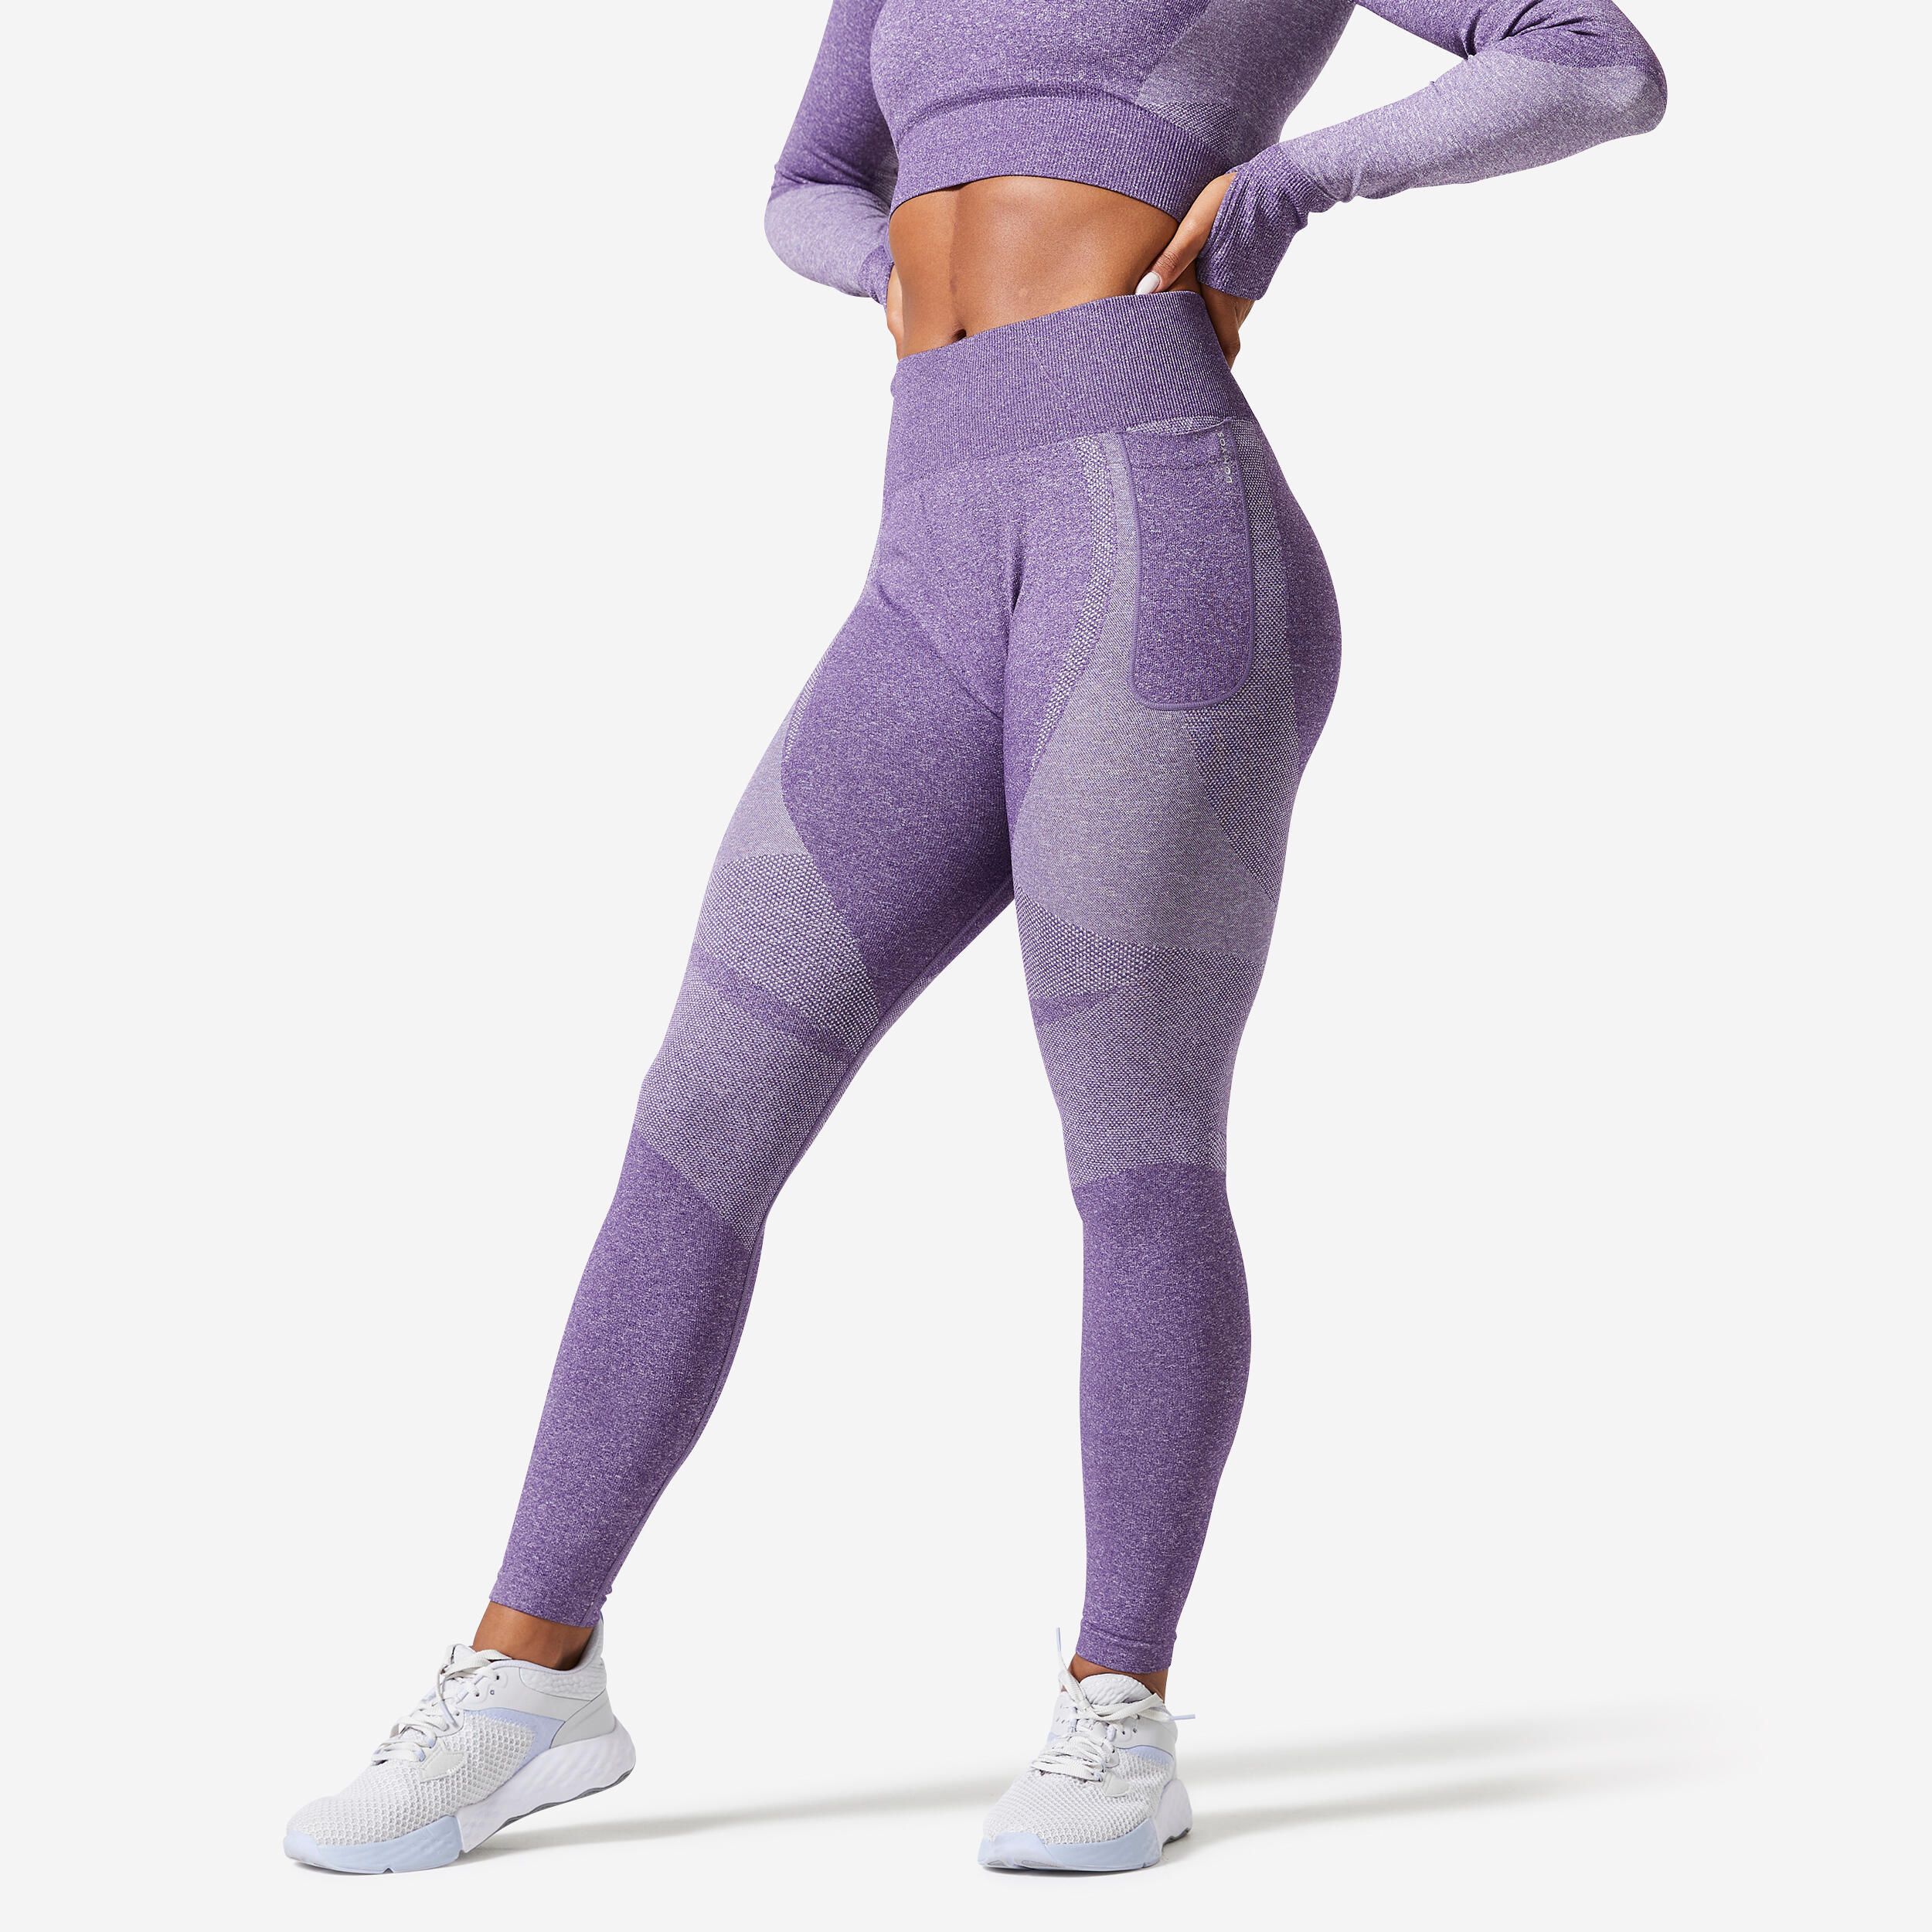 https://contents.mediadecathlon.com/p2510460/3c4e853c77c1153271df6e21edfd5f5cd8ece5bd784f5b2943412334cf206f17/womens-fitness-leggings-fti-900-purple.jpg